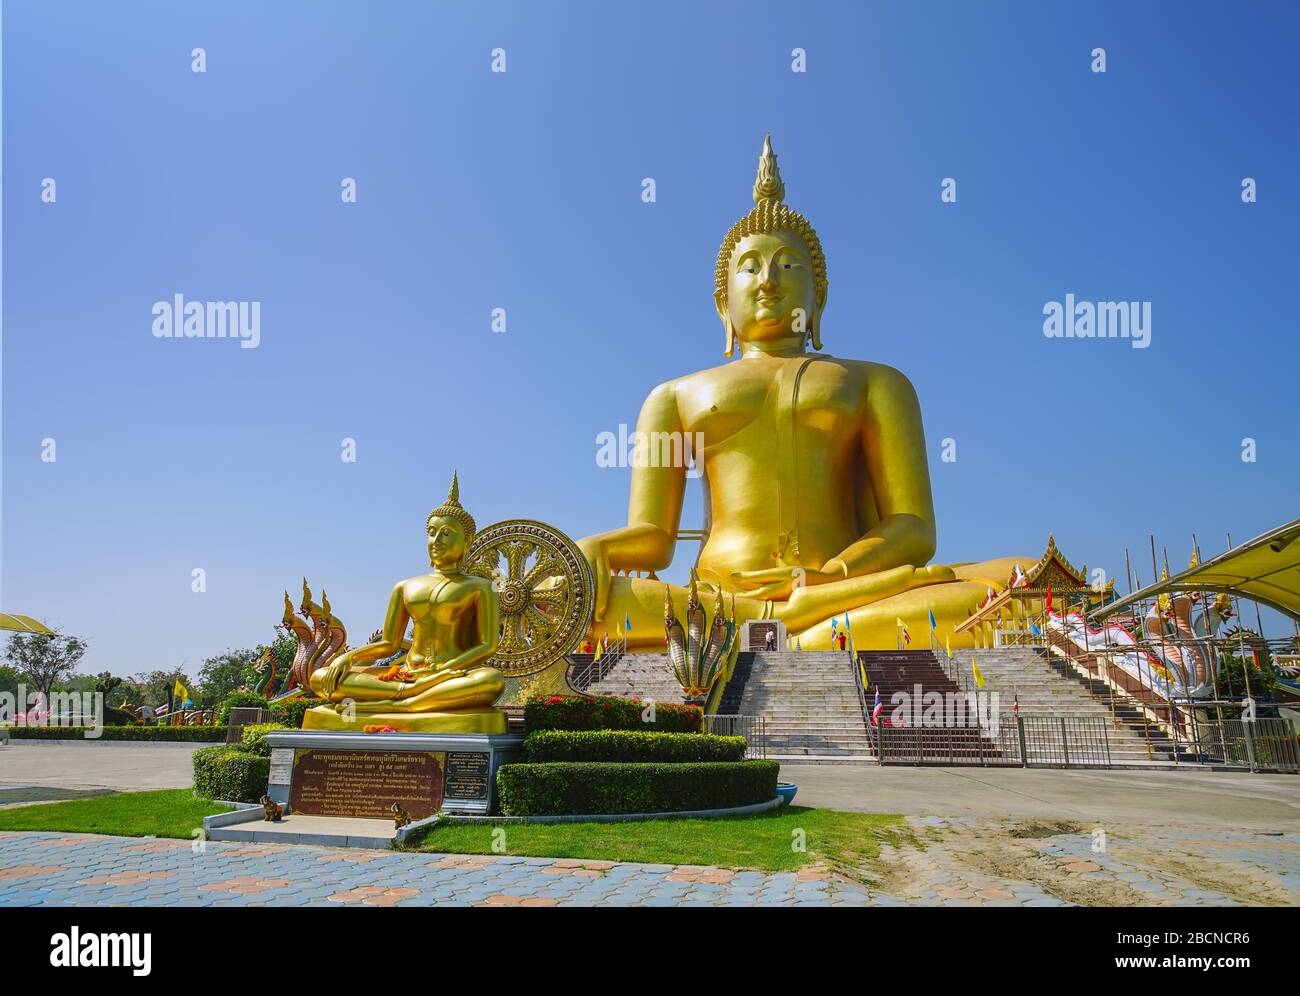 Ang Thong, Thailand - 17. November 2019: Die größte Buddha-Statue der Welt im Wat Muang, Provinz Ang Thong, Thailand. Stockfoto